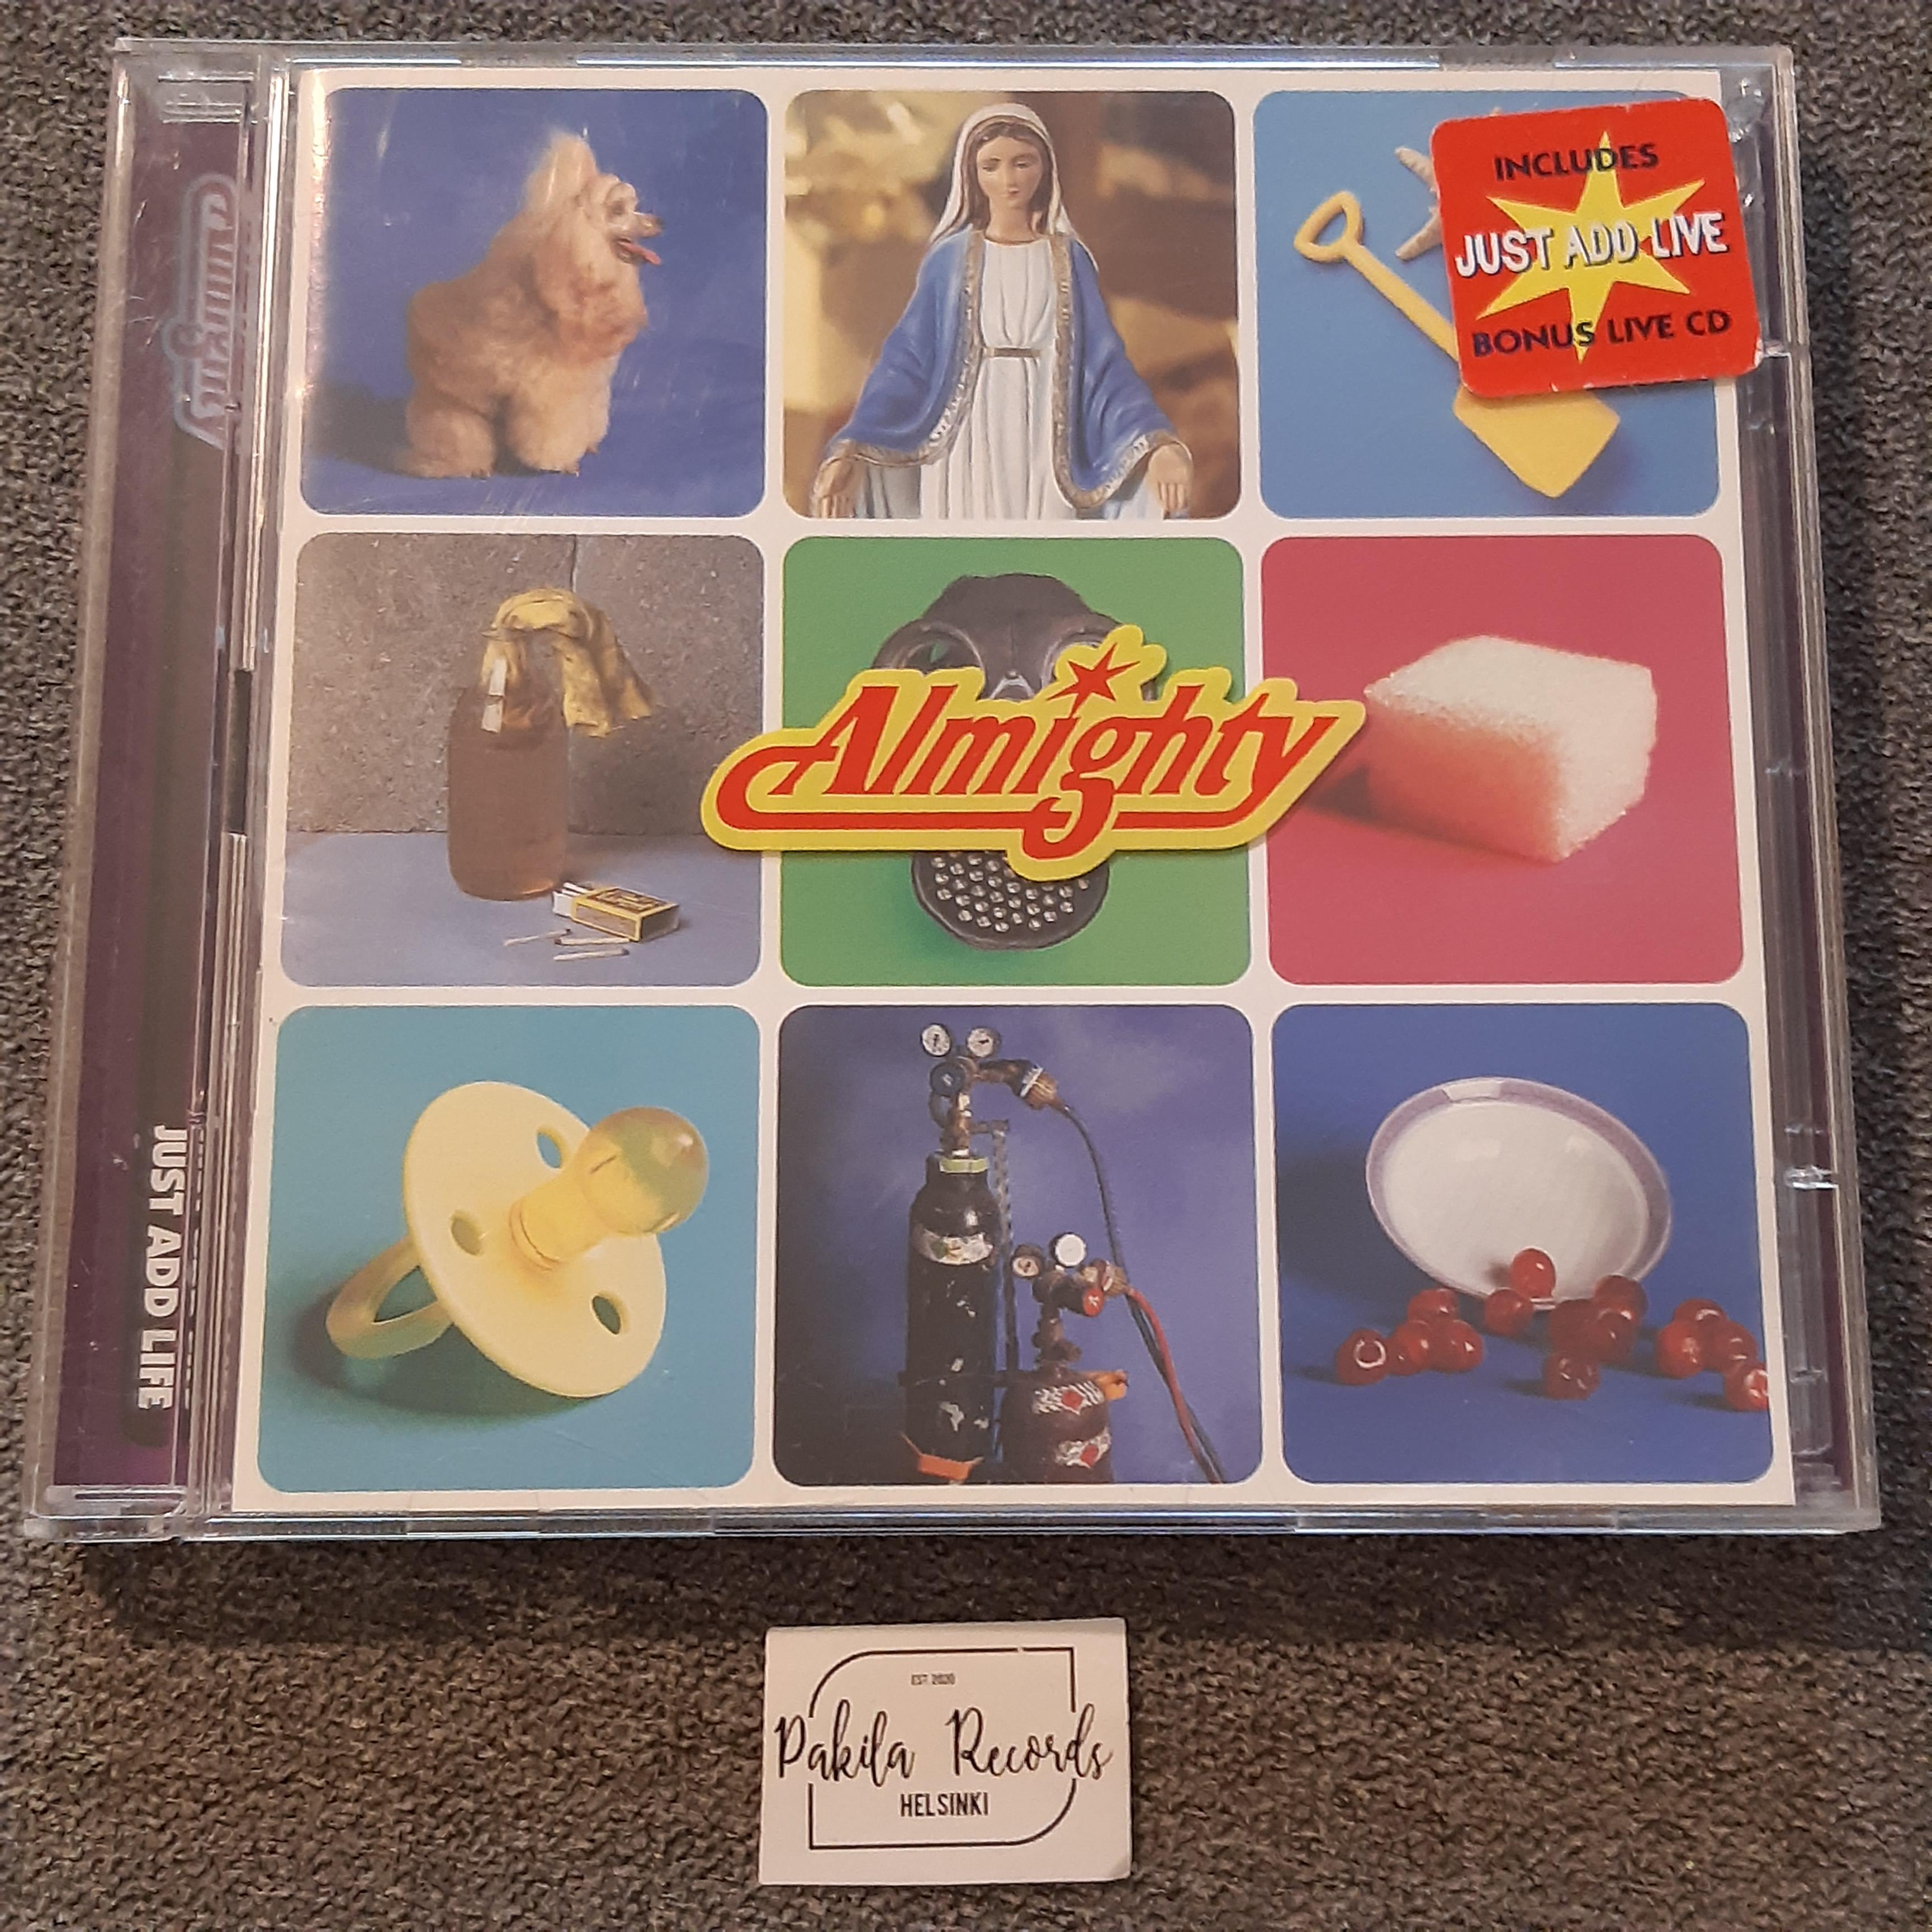 Almighty - Just Add Life - 2 CD (käytetty)